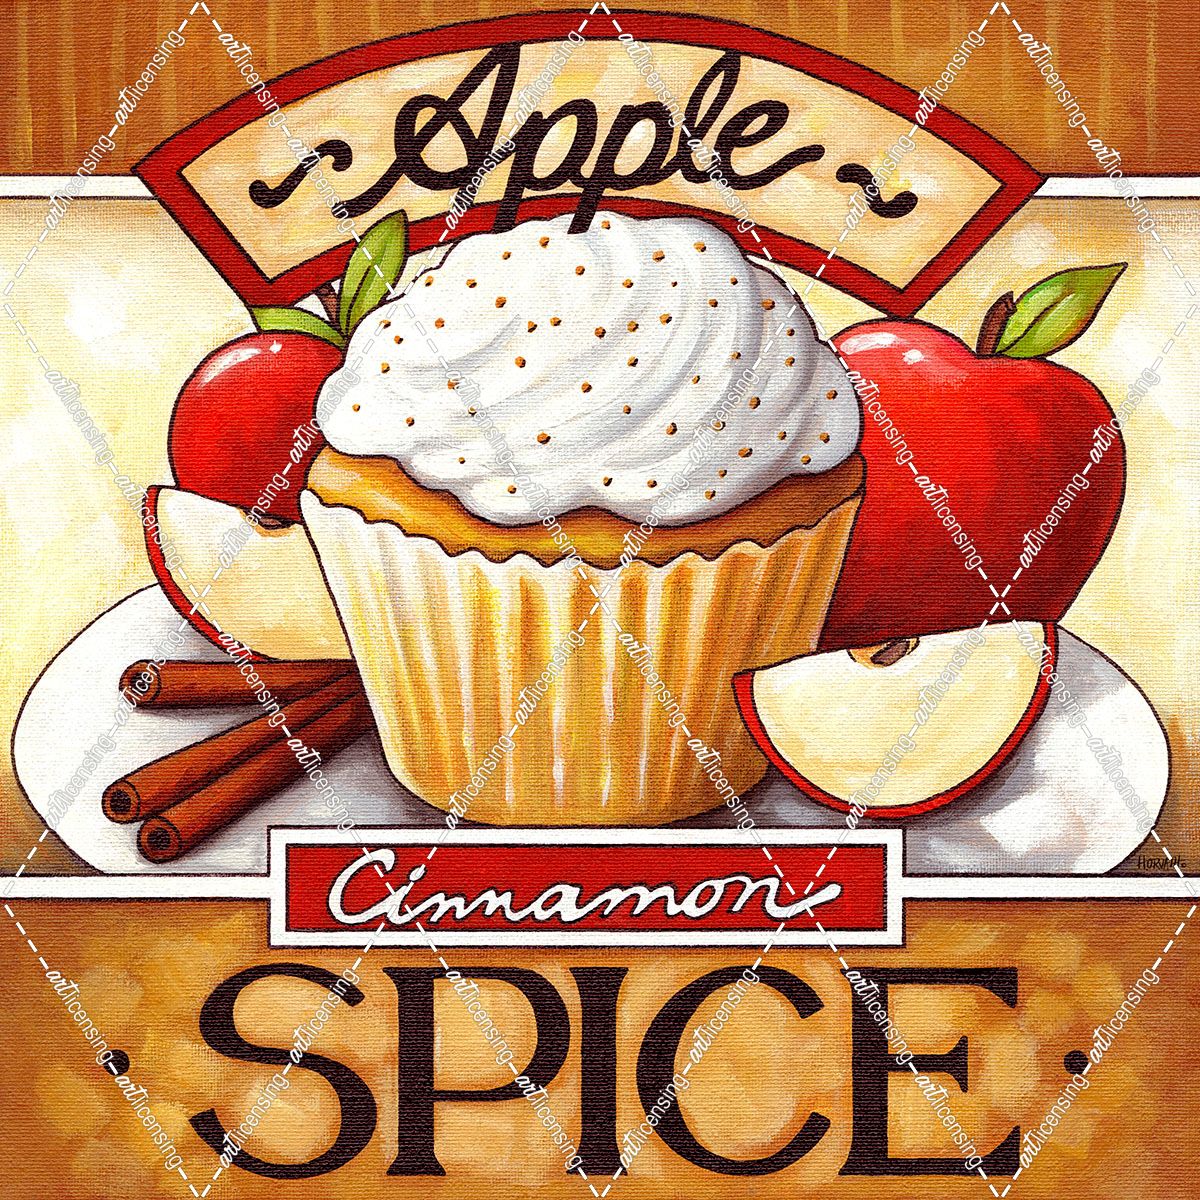 Cupcake Apple Cinnamon  Spice